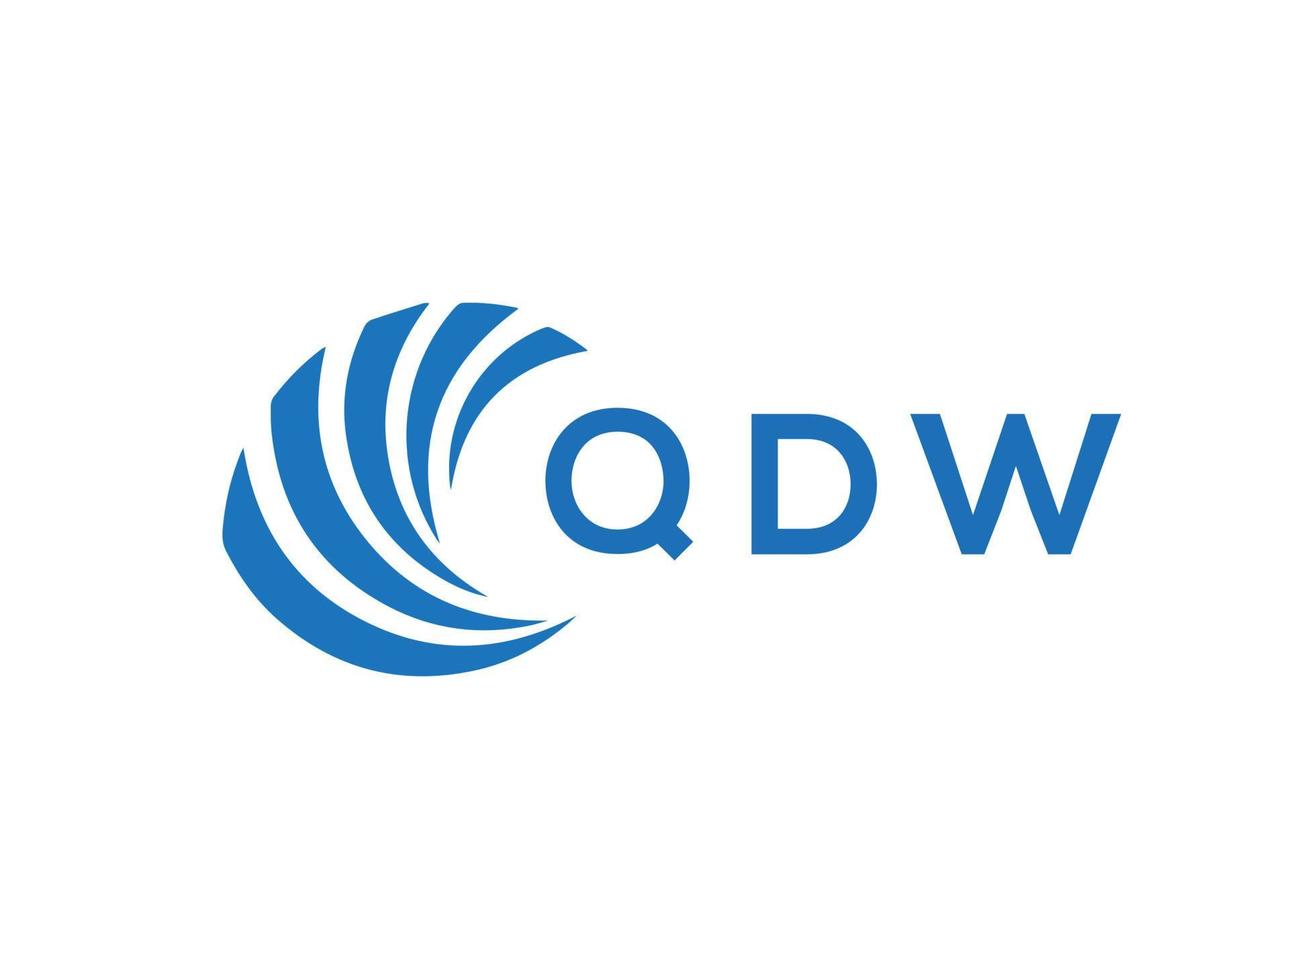 qdw lettera logo design su bianca sfondo. qdw creativo cerchio lettera logo concetto. qdw lettera design. vettore